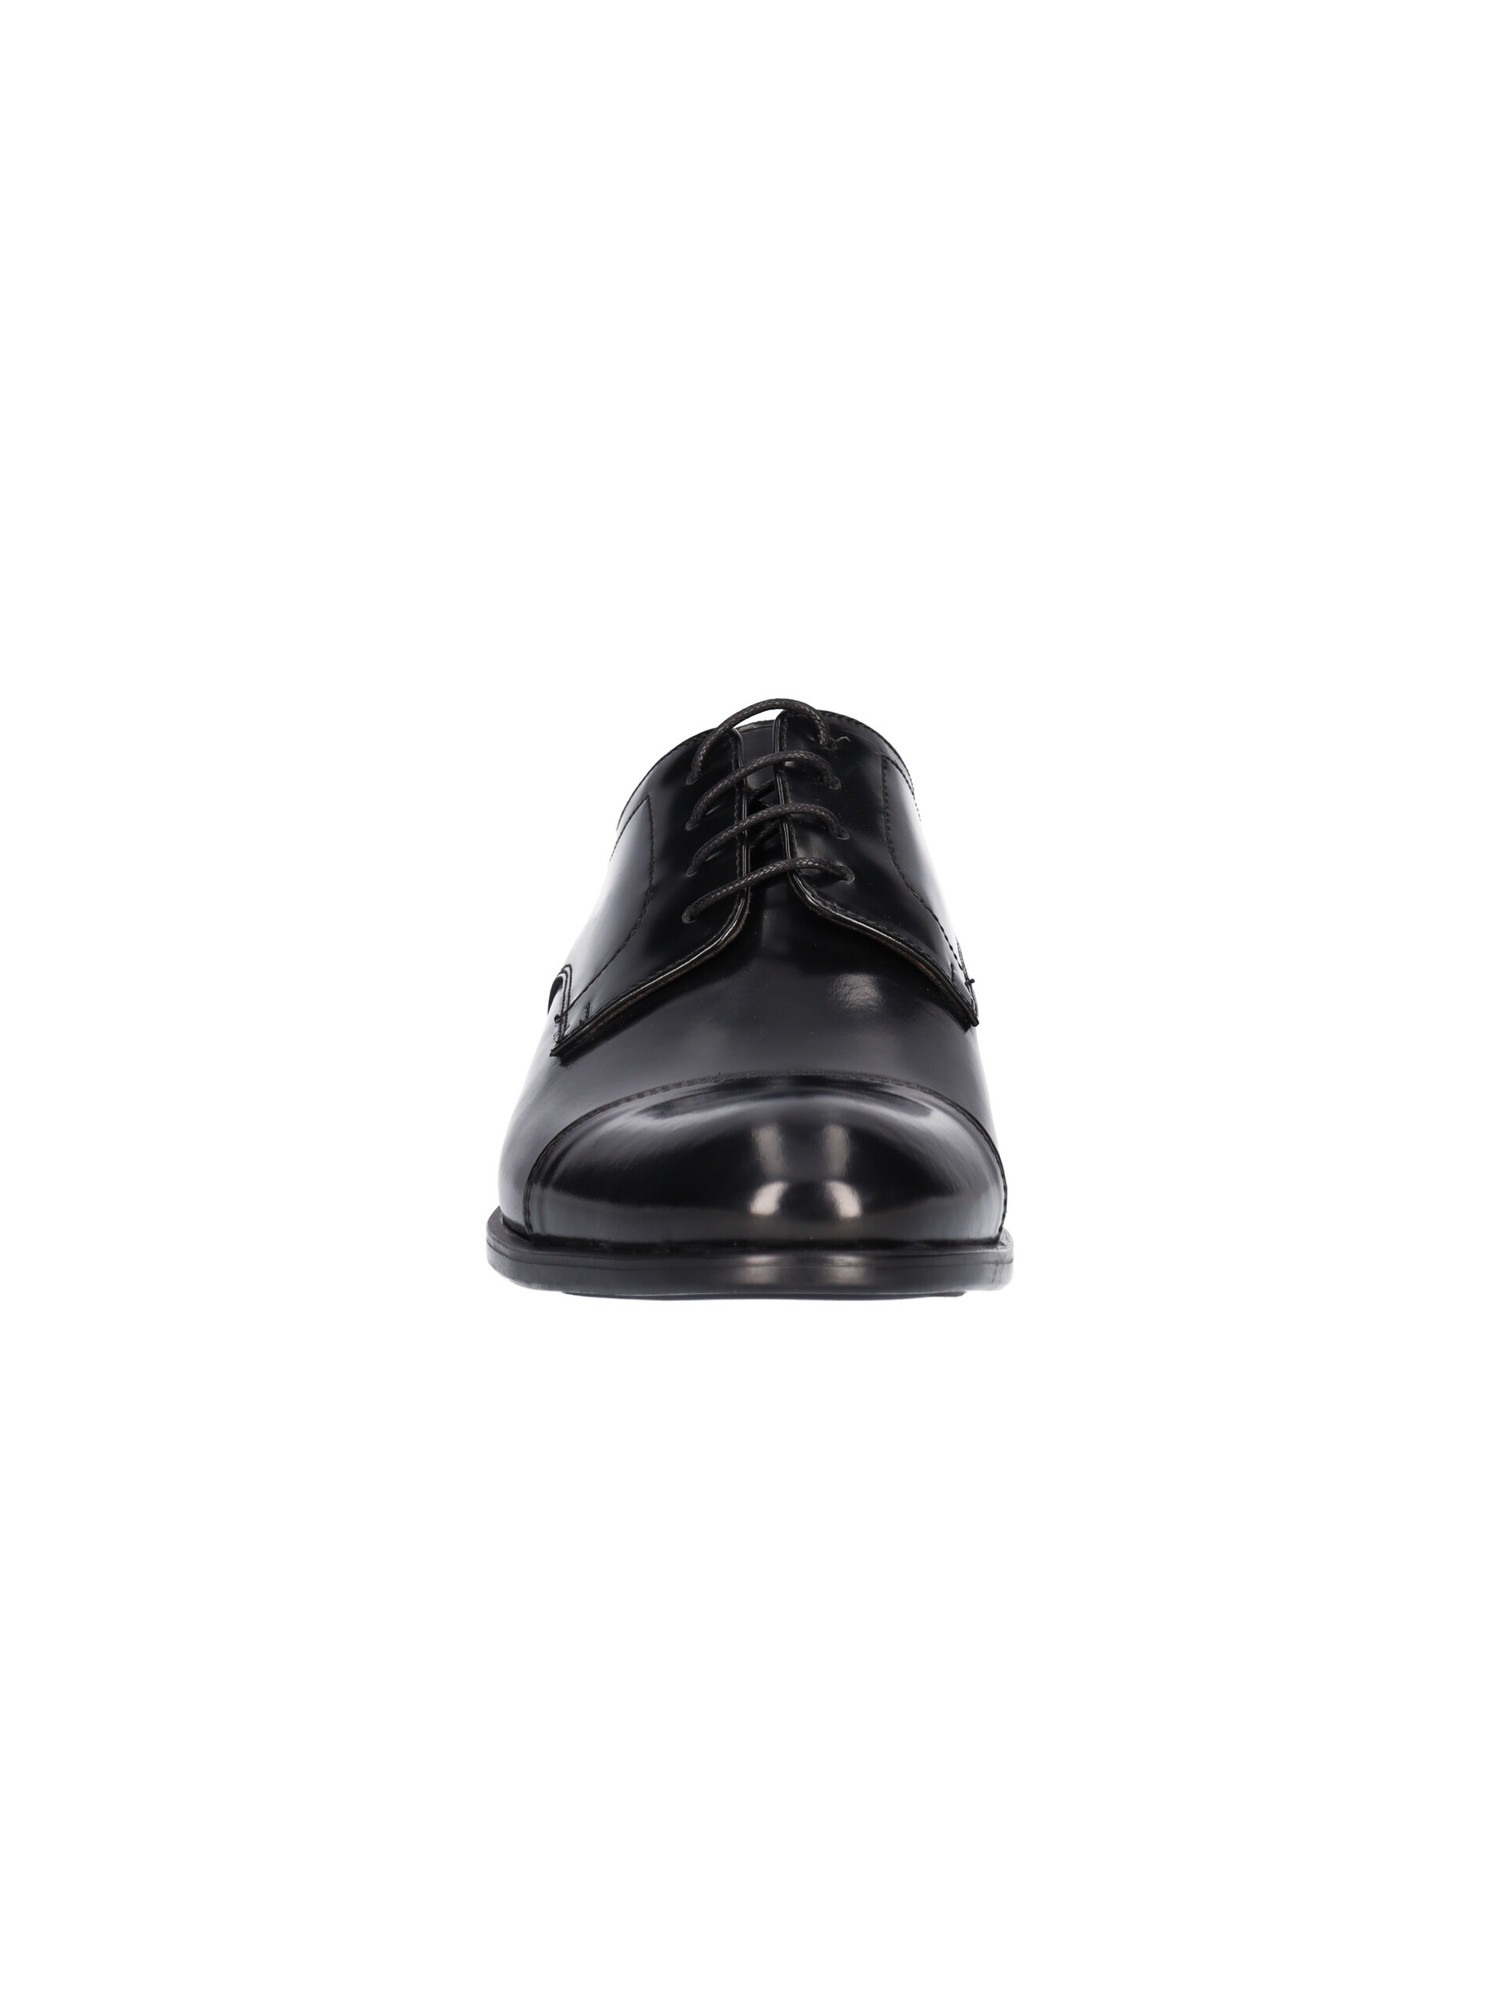 scarpa-elegante-exton-da-uomo-nera-a630b5